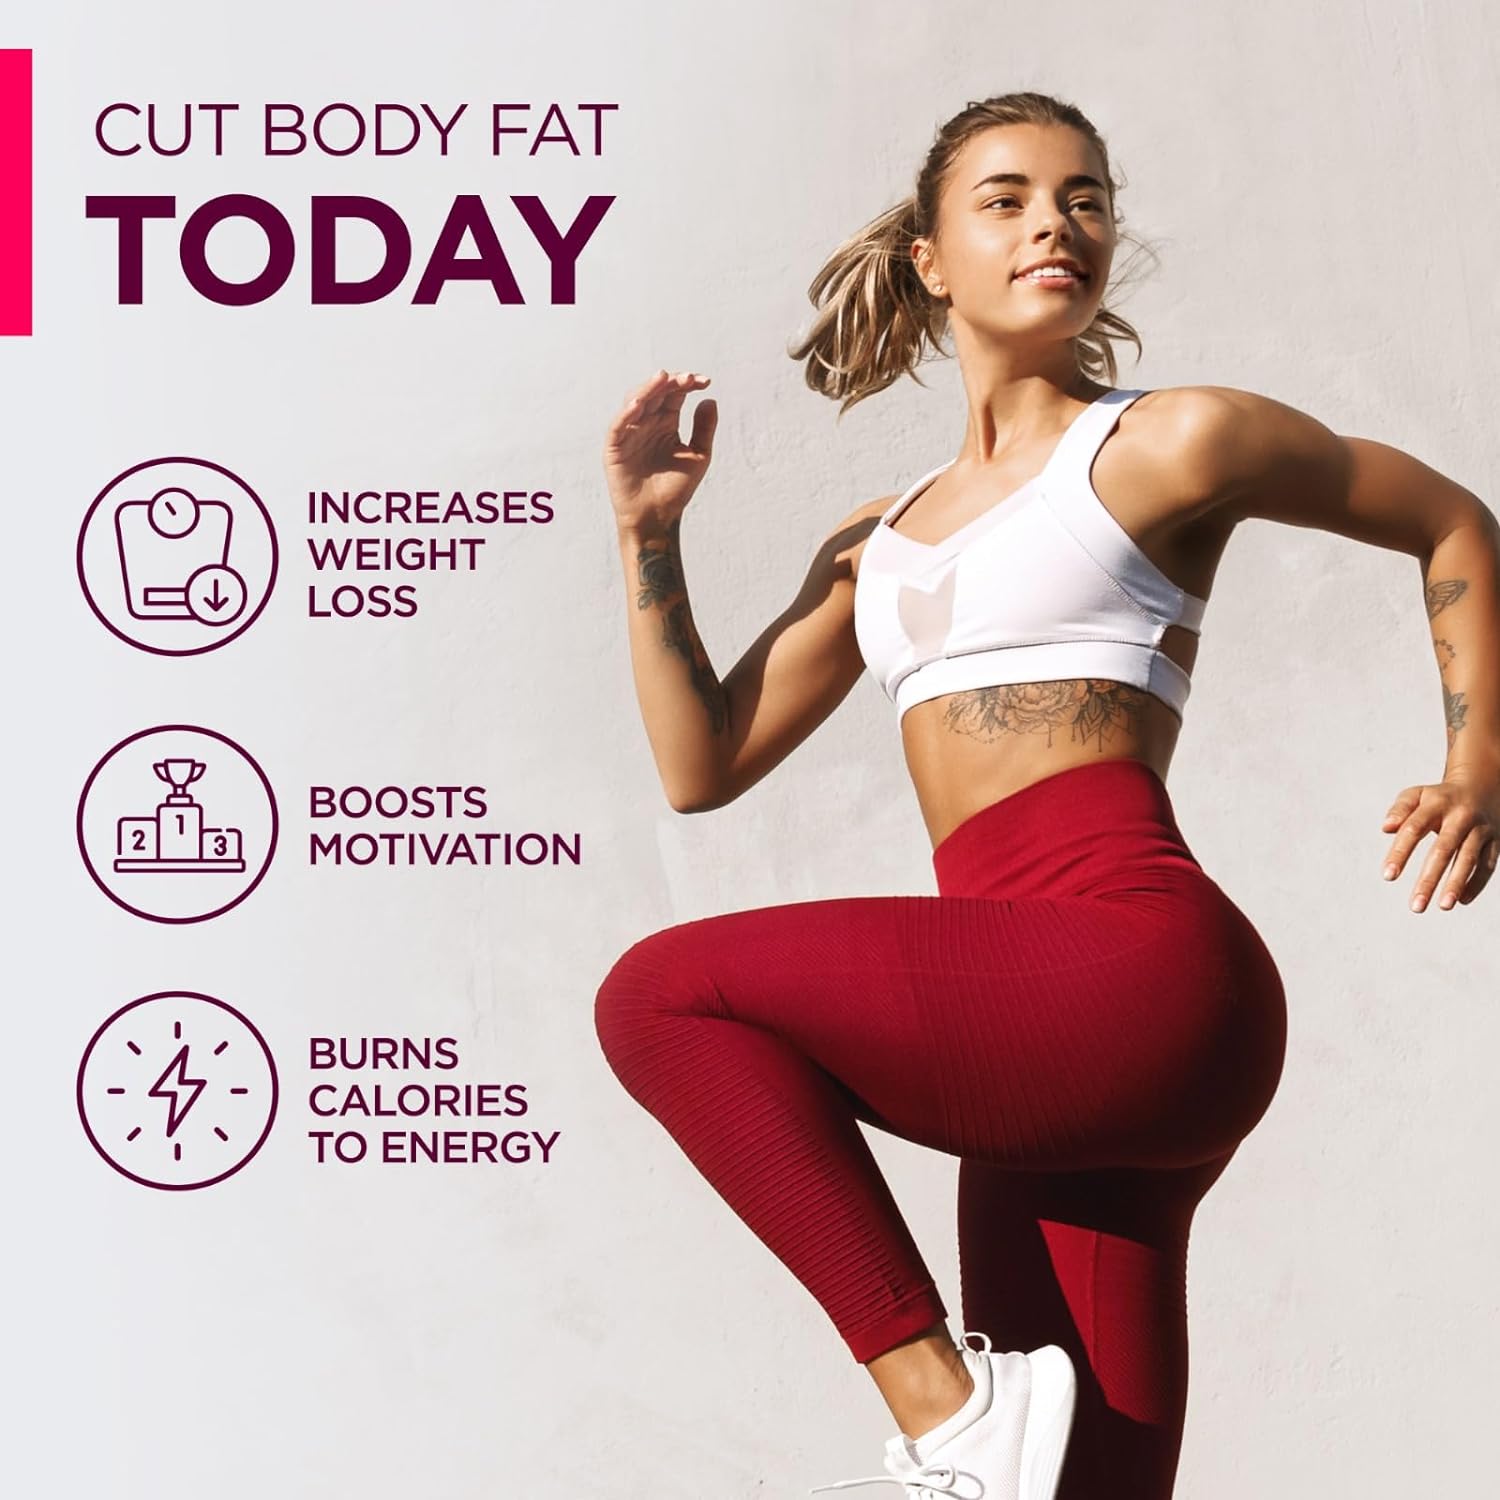 Cut body fat today